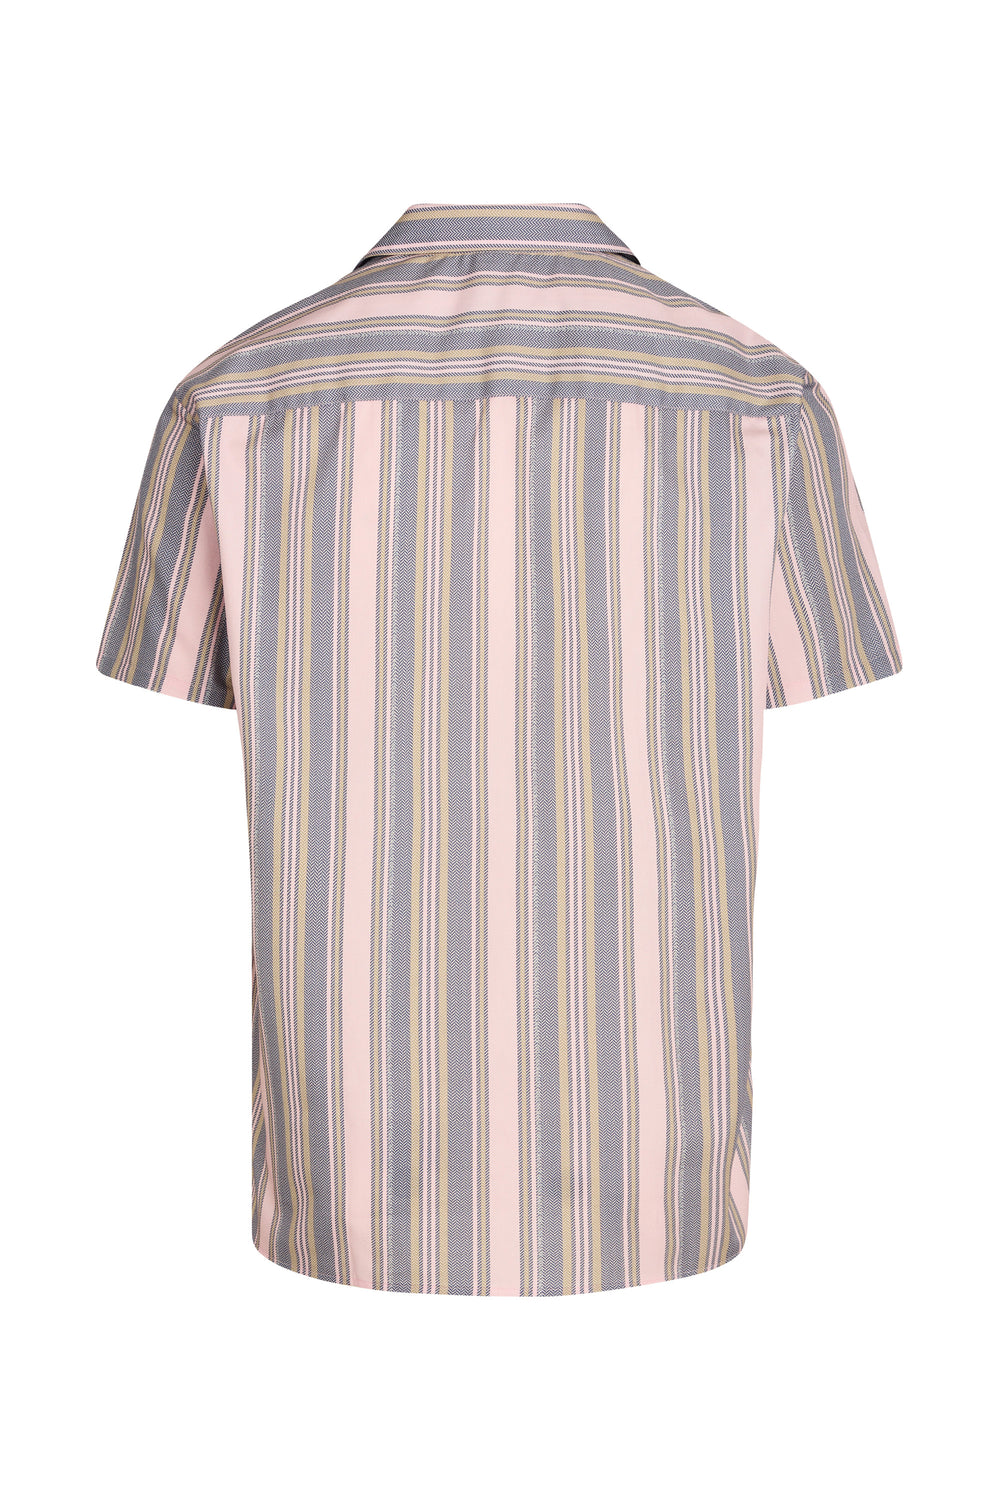 Bruuns Bazaar Men SkyBBHomer shirt Shirts Striped flamingo